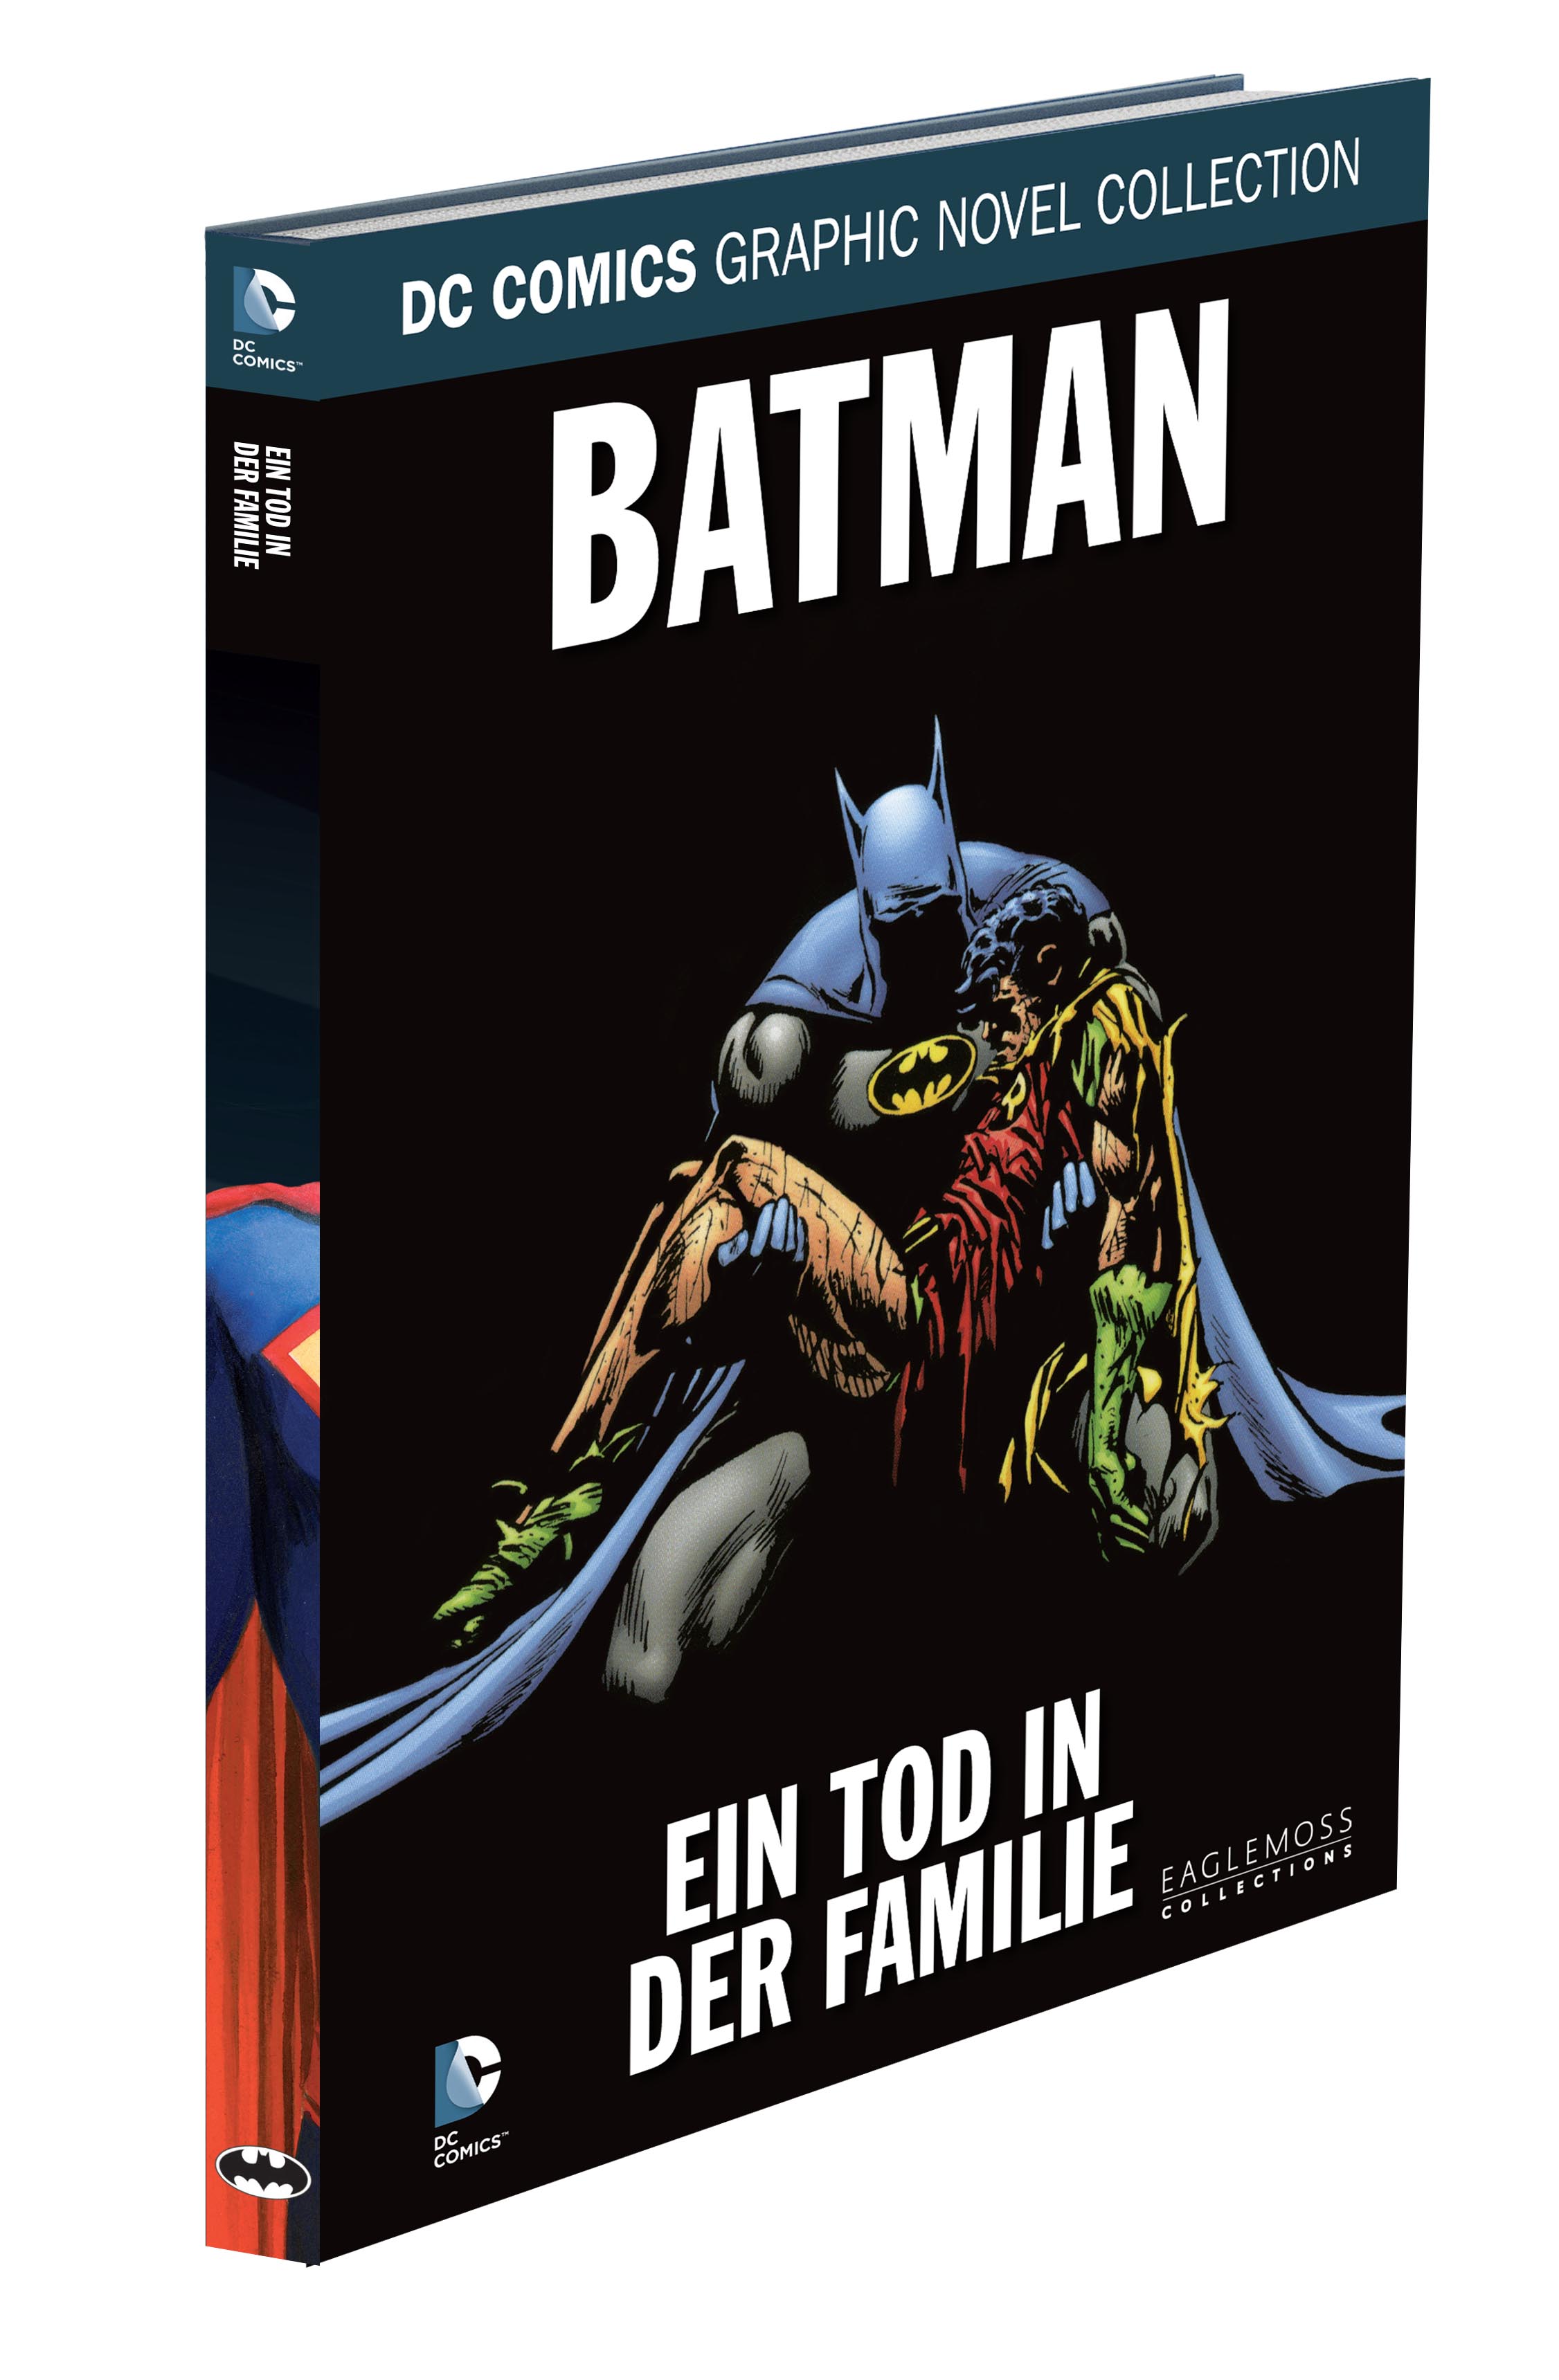 DC Comics Graphic Novel Collection Batman - Ein Tod in der Familie